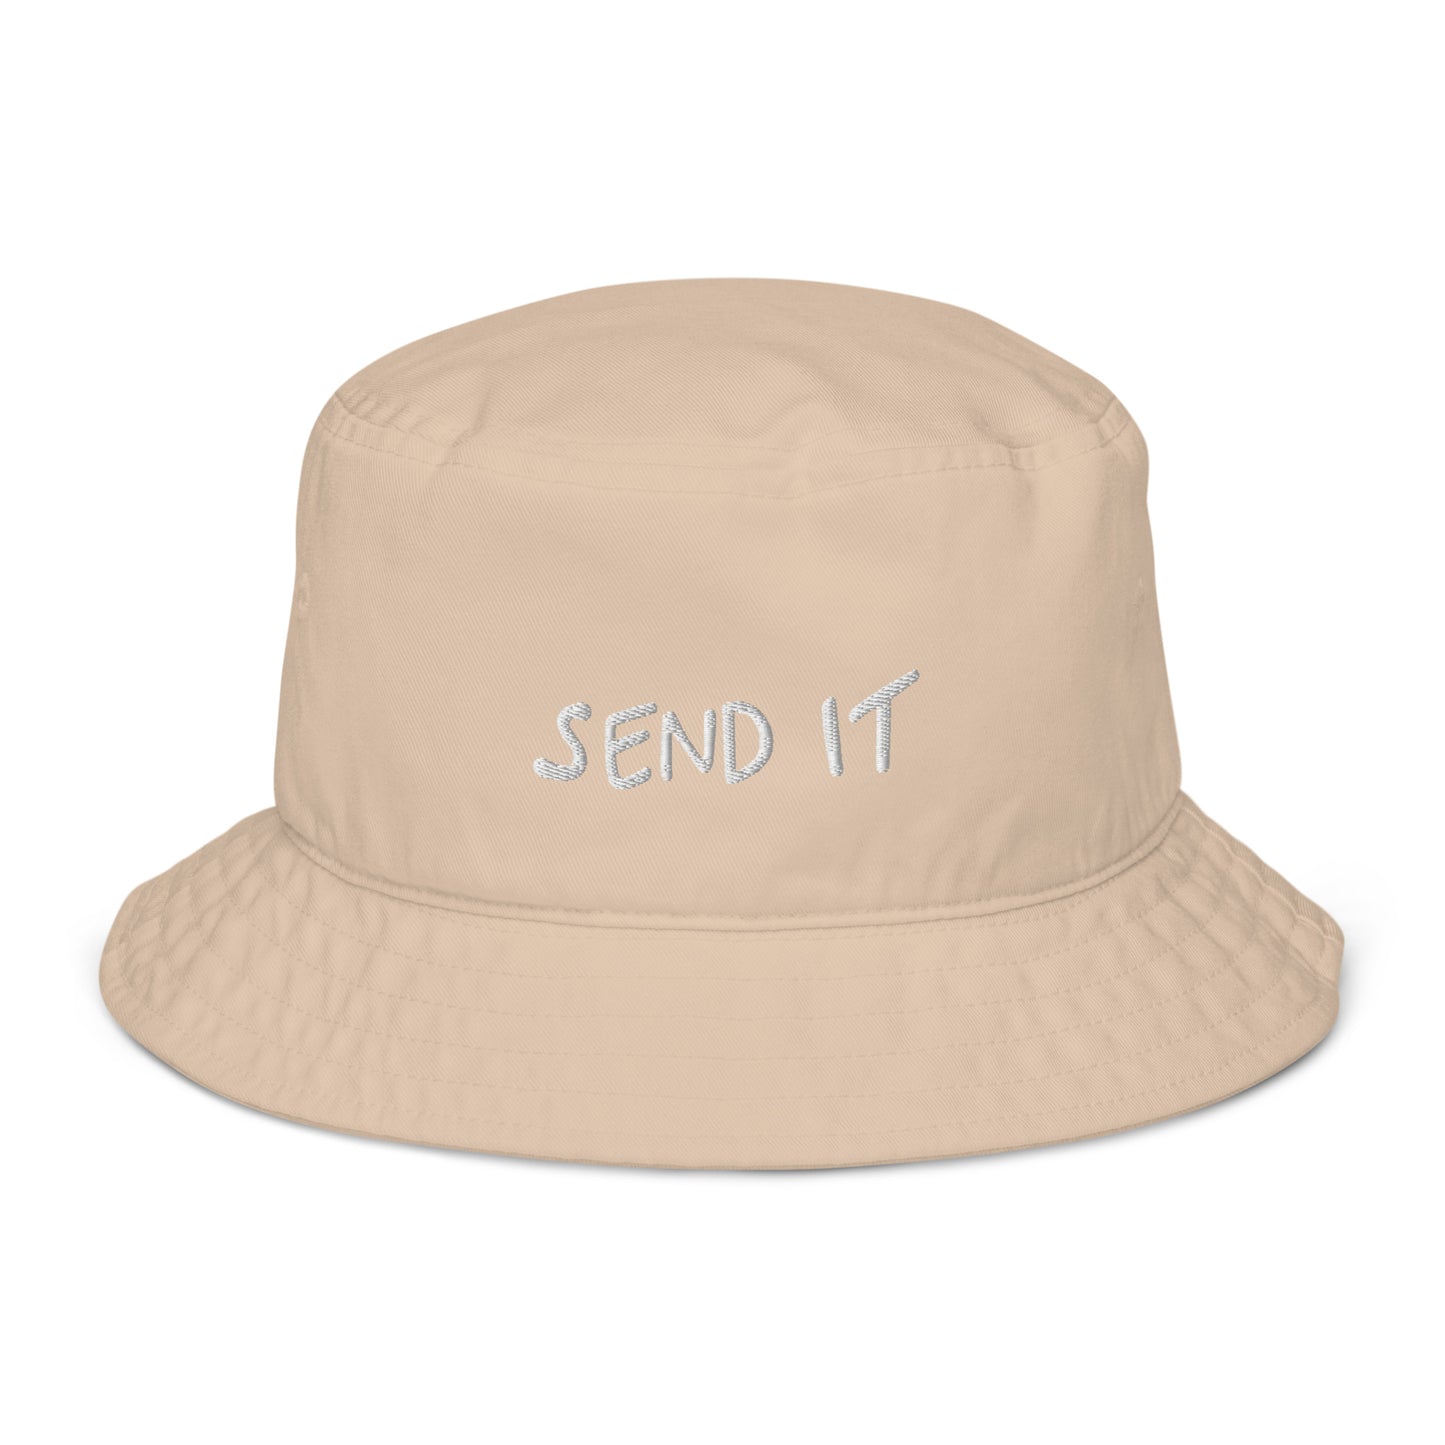 send it organic cotton bucket hat